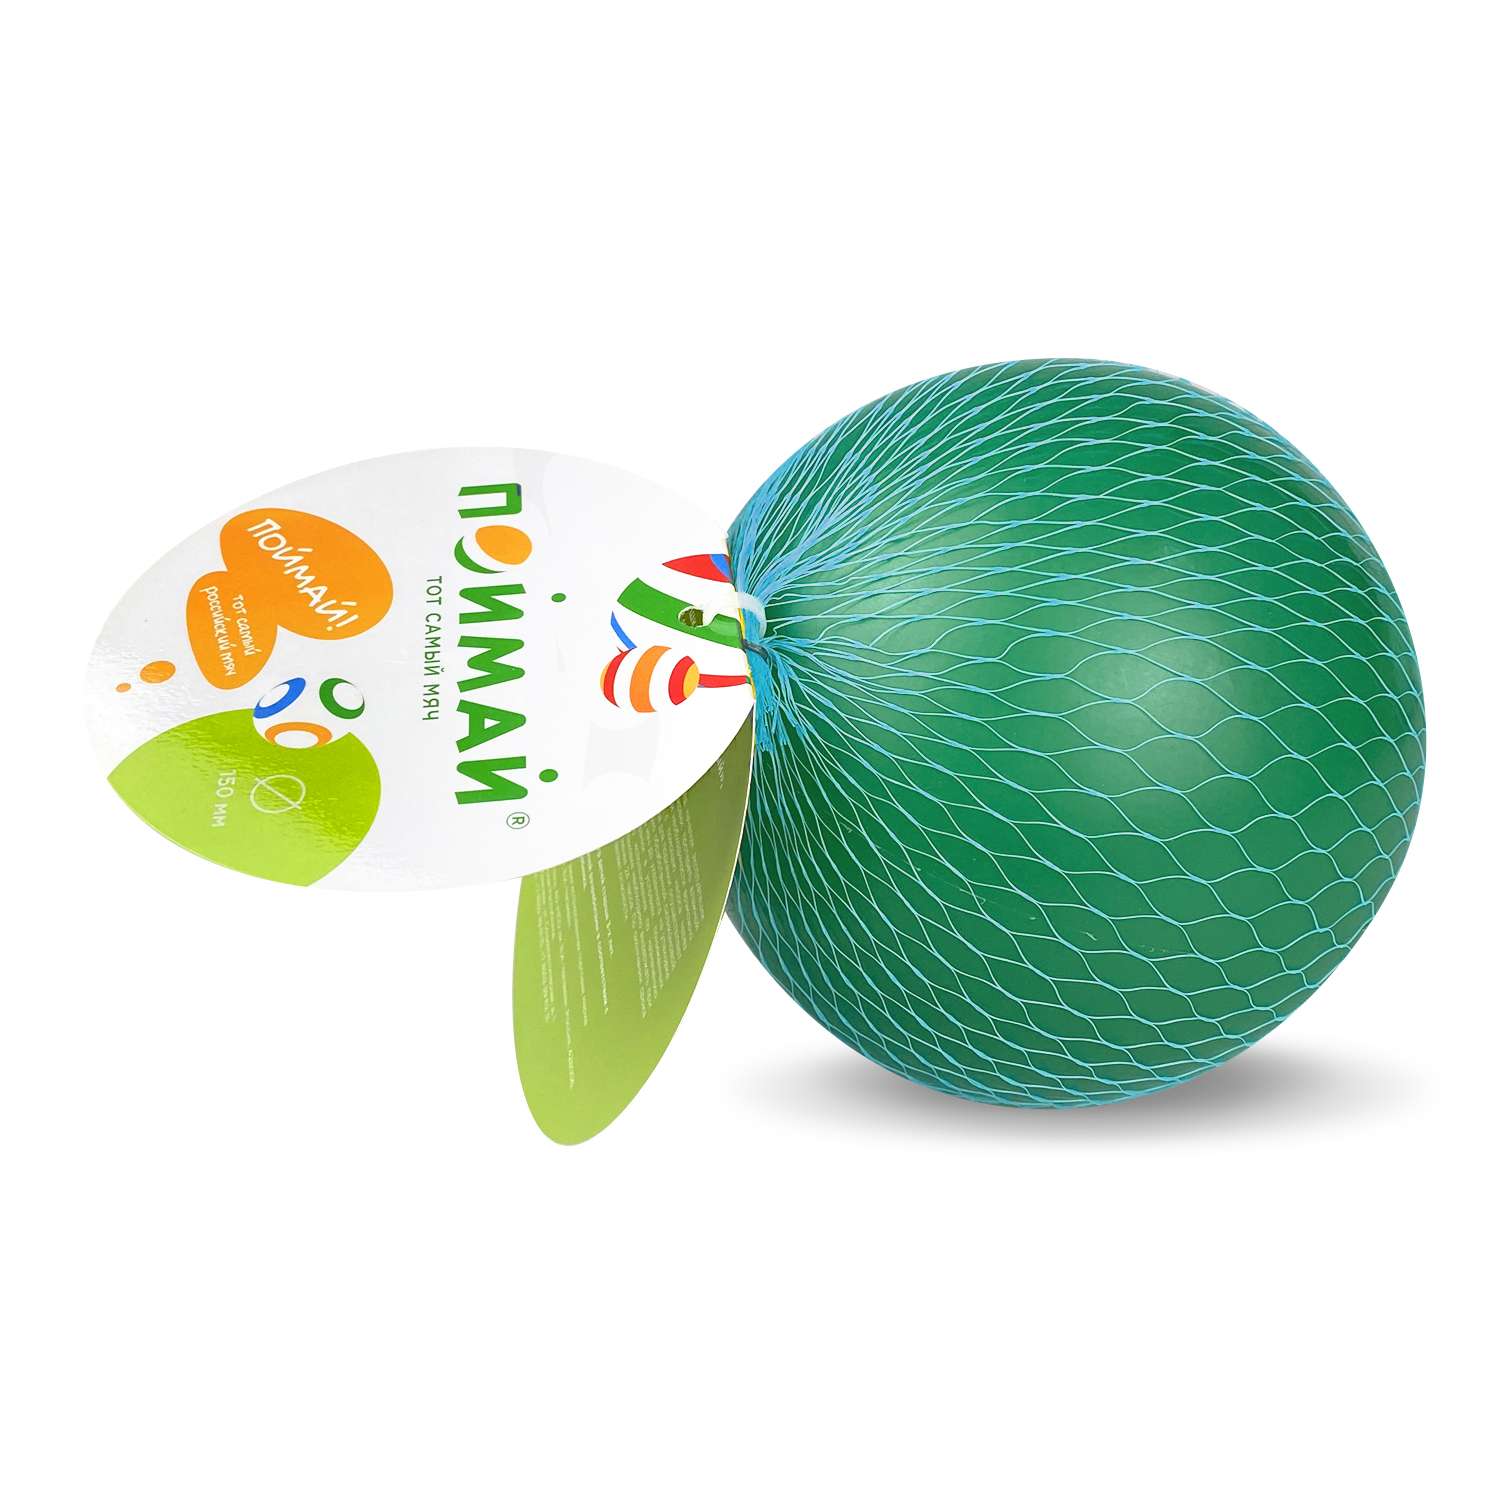 Мяч ПОЙМАЙ диаметр 150мм Радуга зелёный - фото 2